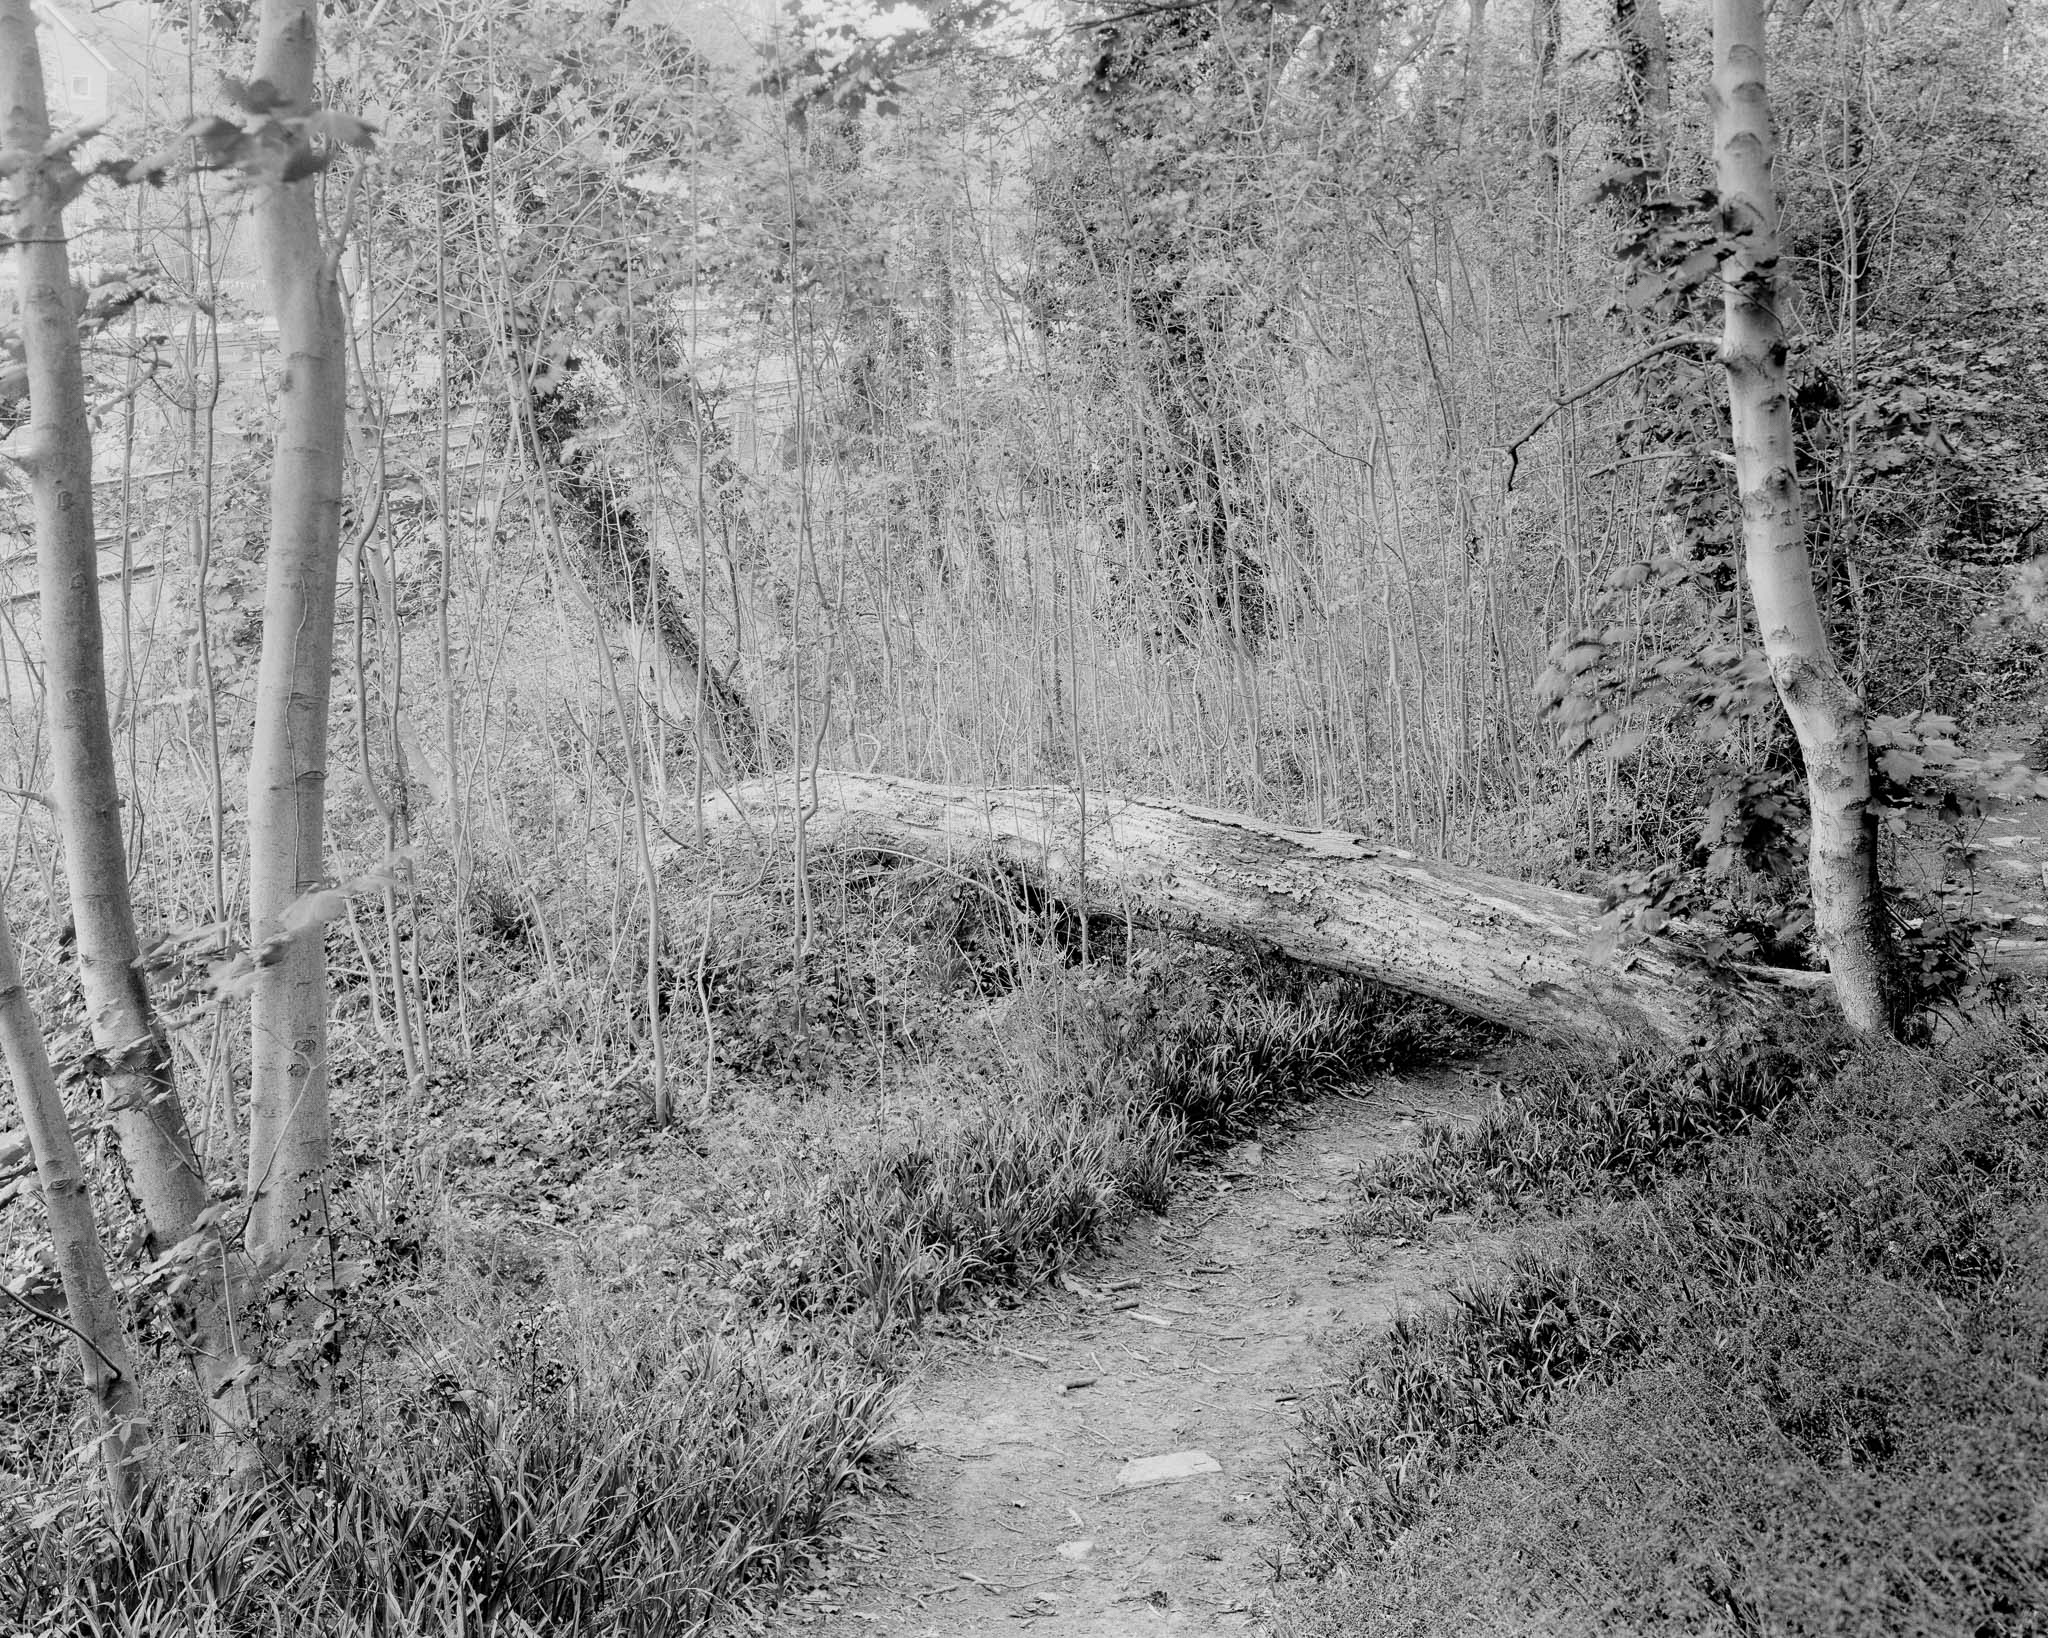 Black and White Photograph of Woodland Path alongside The River Sheaf, Sheffield. Photo by Jonny Sutton.